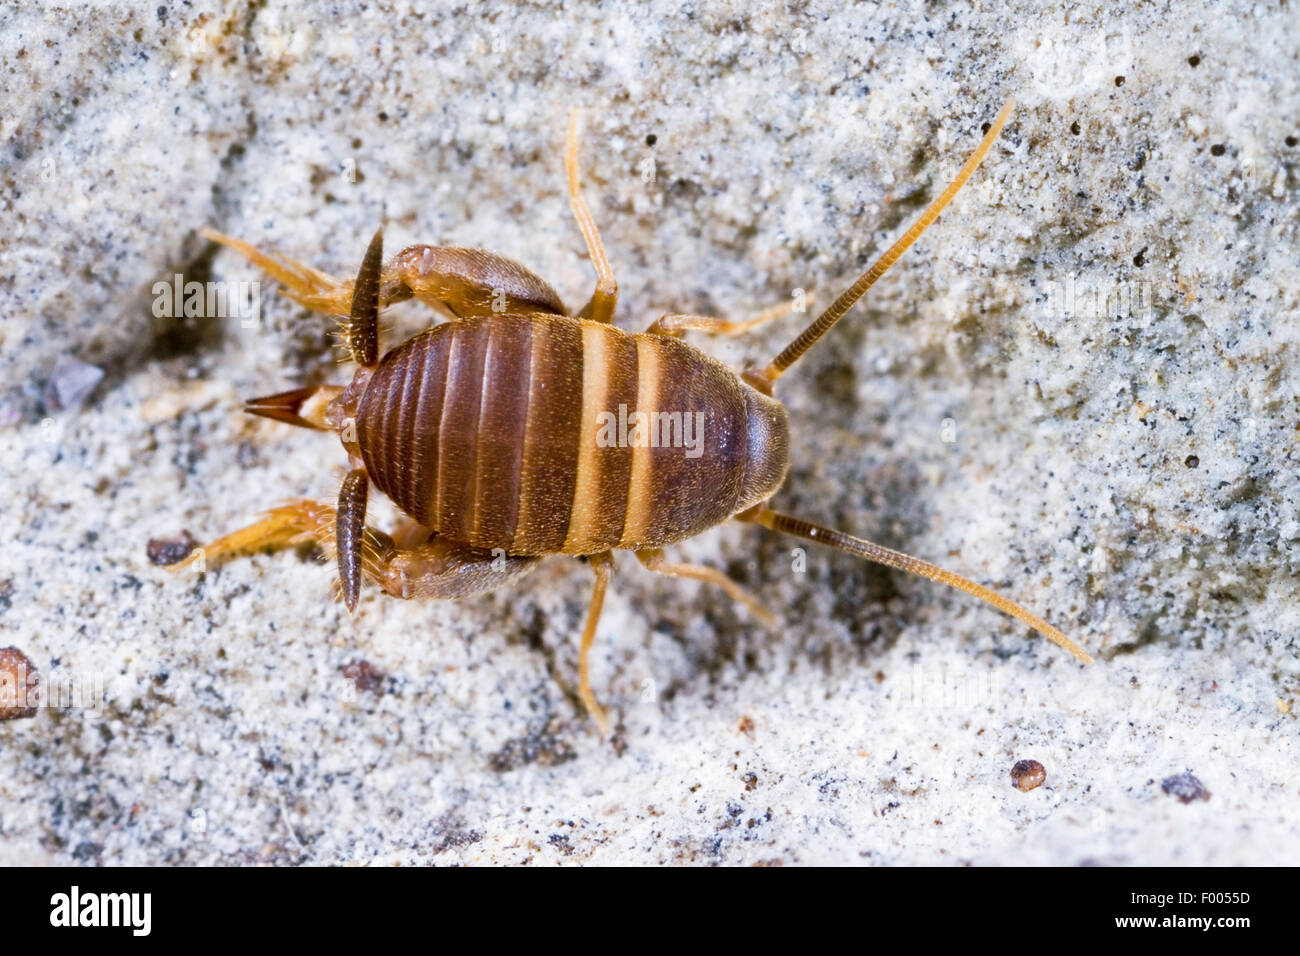 Ant-loving cricket, Ant cricket, Myrmecophilous cricket, Ant's-nest cricket (Myrmecophilus acervorum), on a stone, Germany Stock Photo